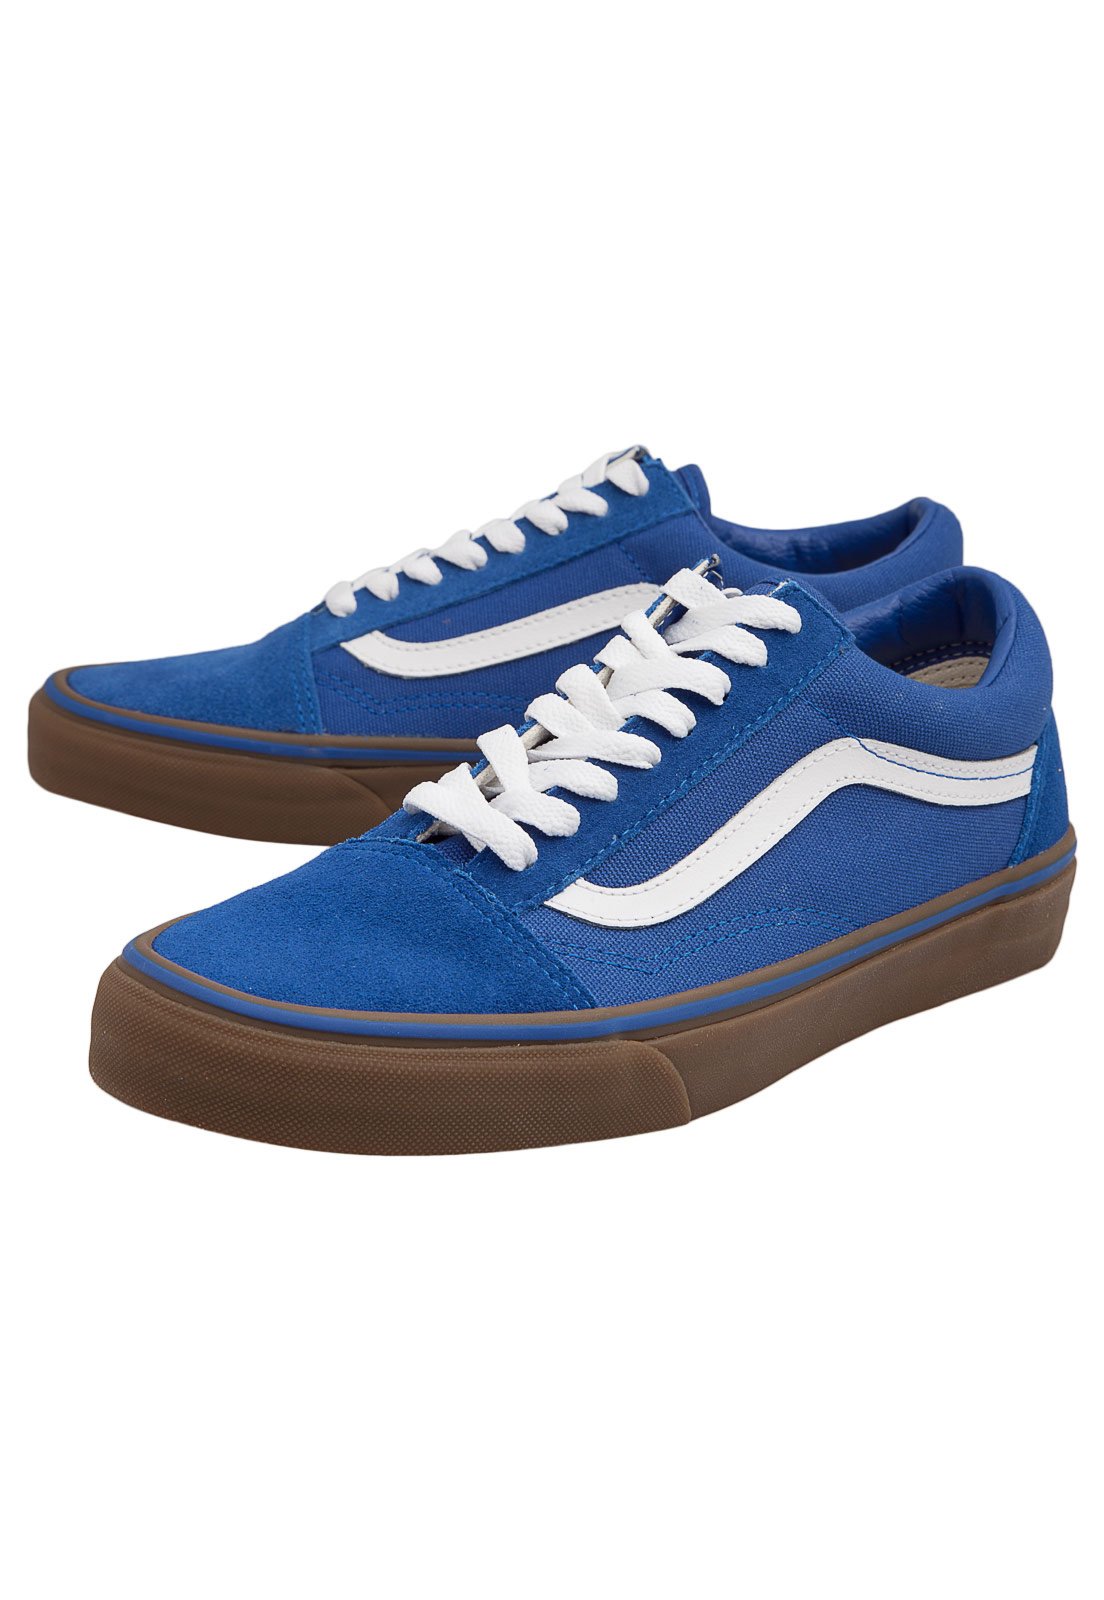 Tênis Vans Old Skool Azul - Compre Agora